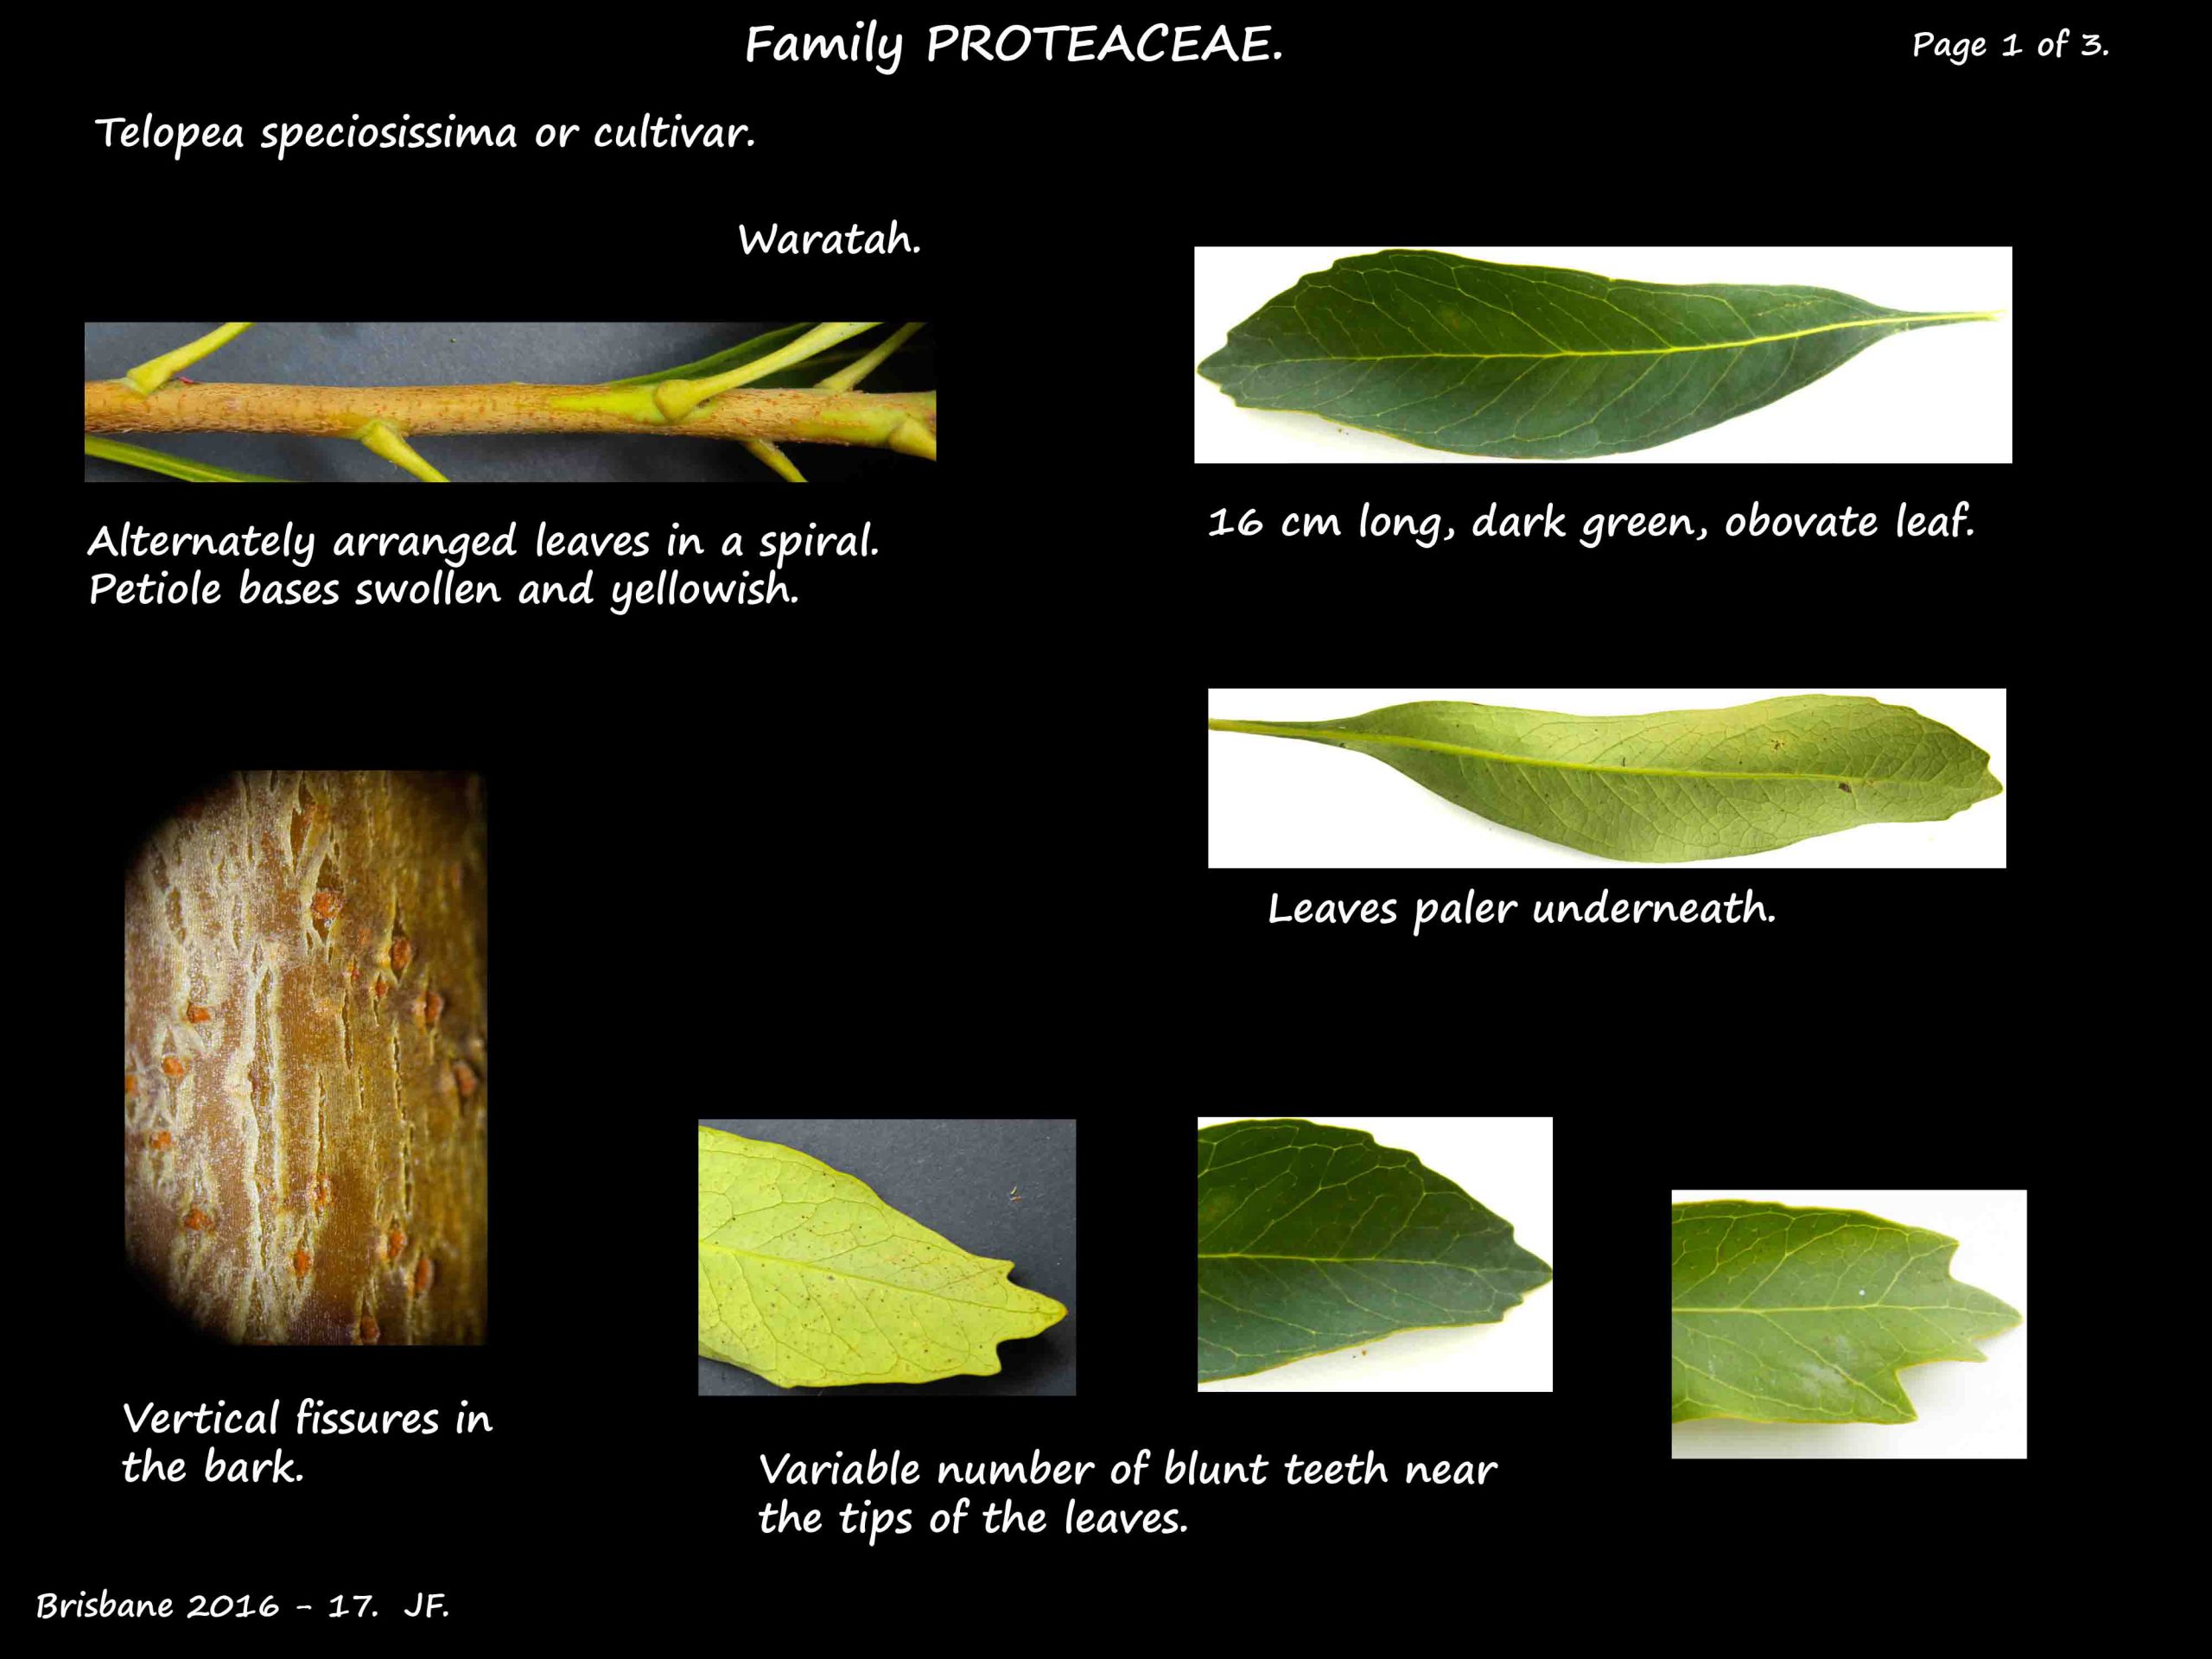 1 Telopea speciosissima bark & leaves